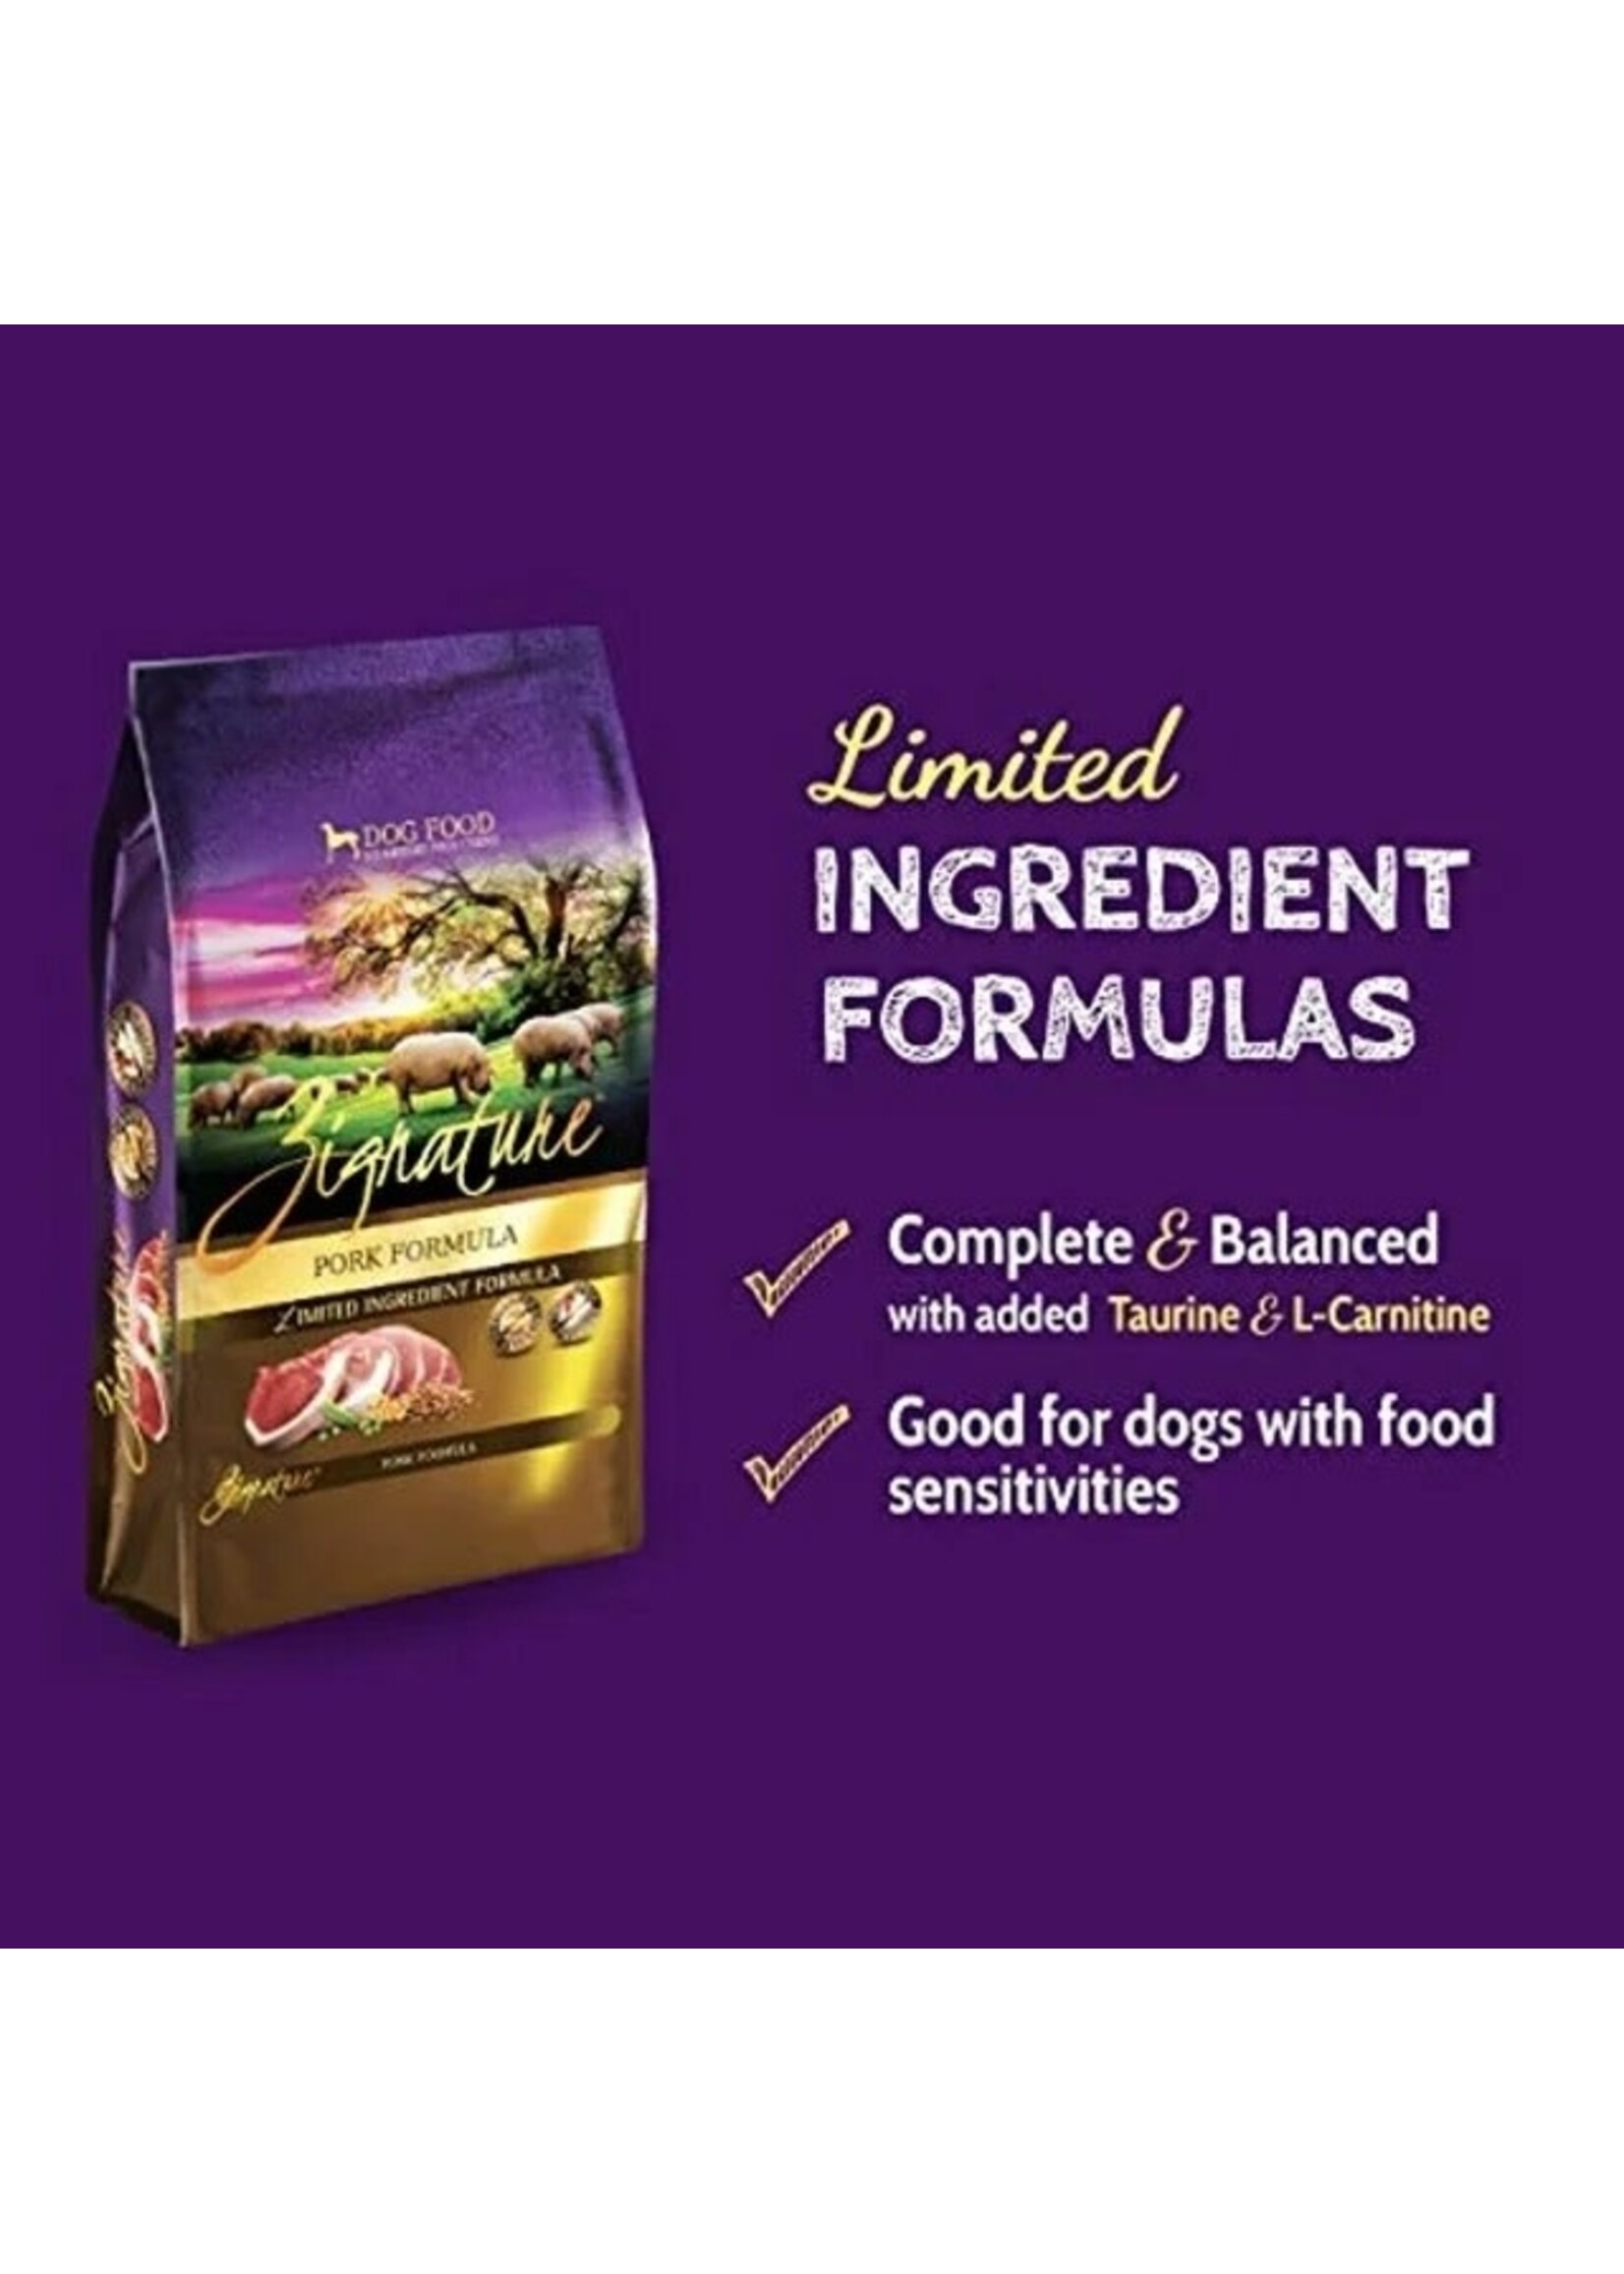 Zignature Pork Formula with Probiotics Limited Ingredient Formula Grain Free All Life Stages Dog Food 4 lbs